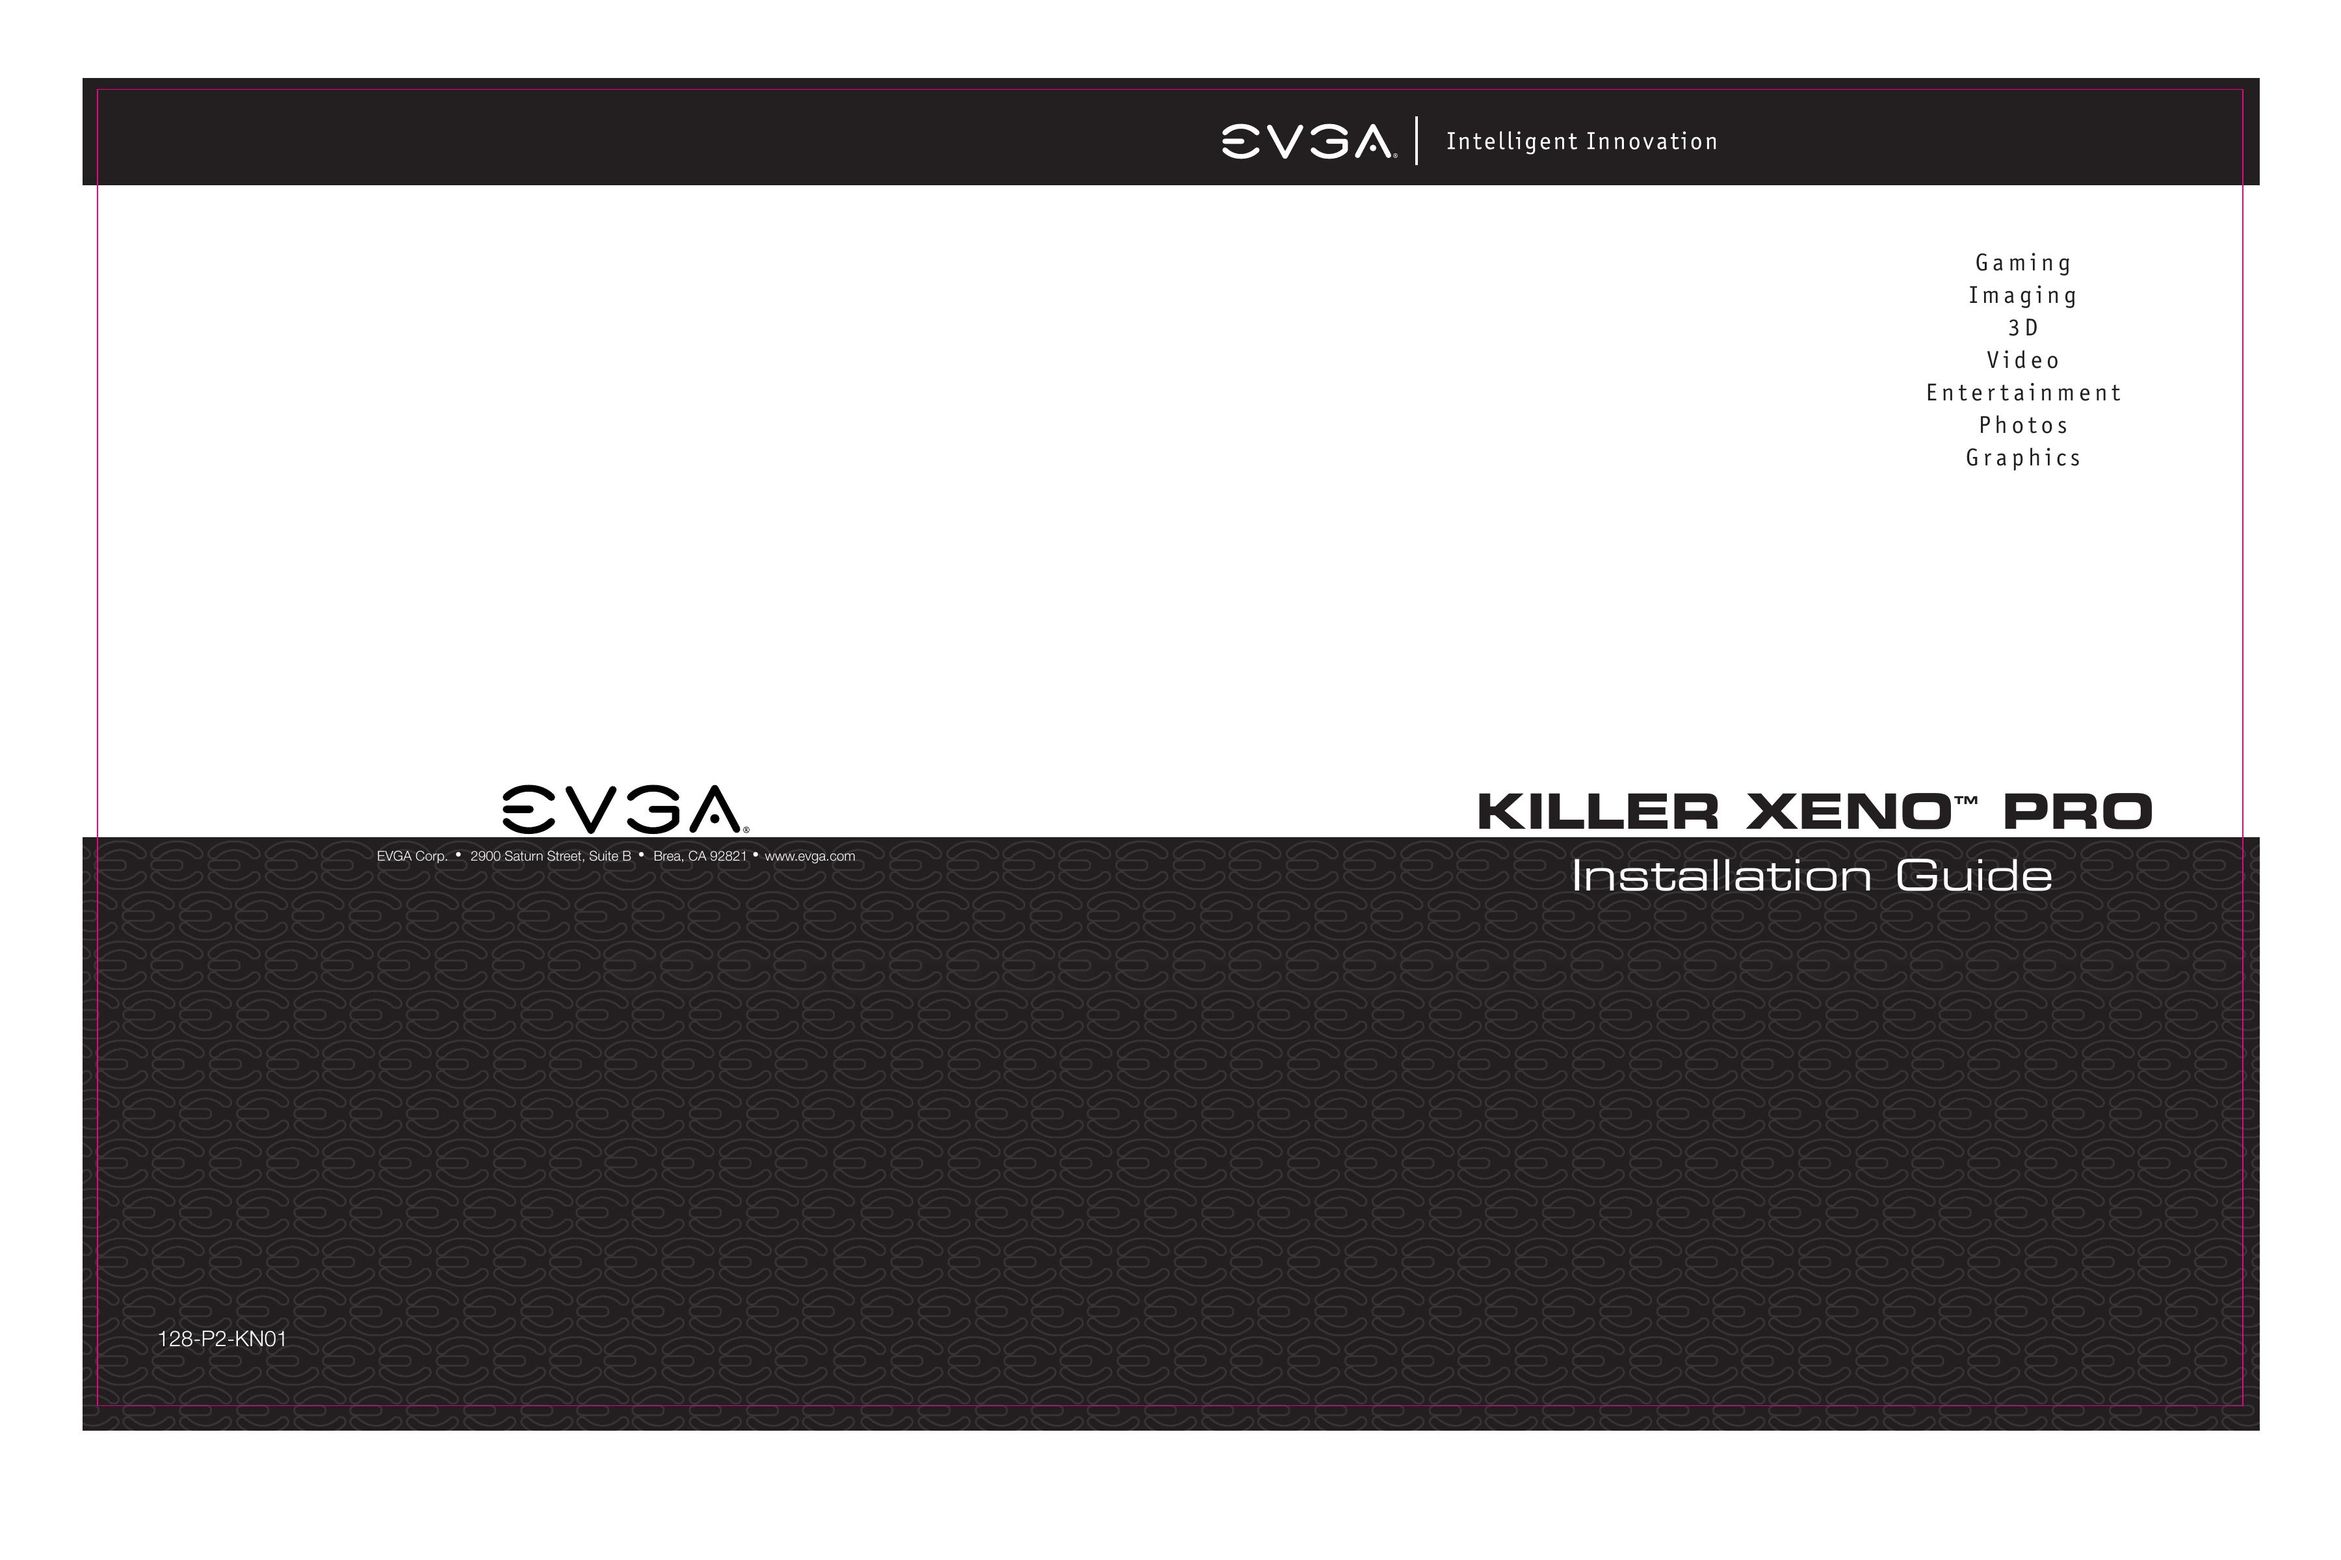 EVGA 128-P2-KN01 Computer Drive User Manual